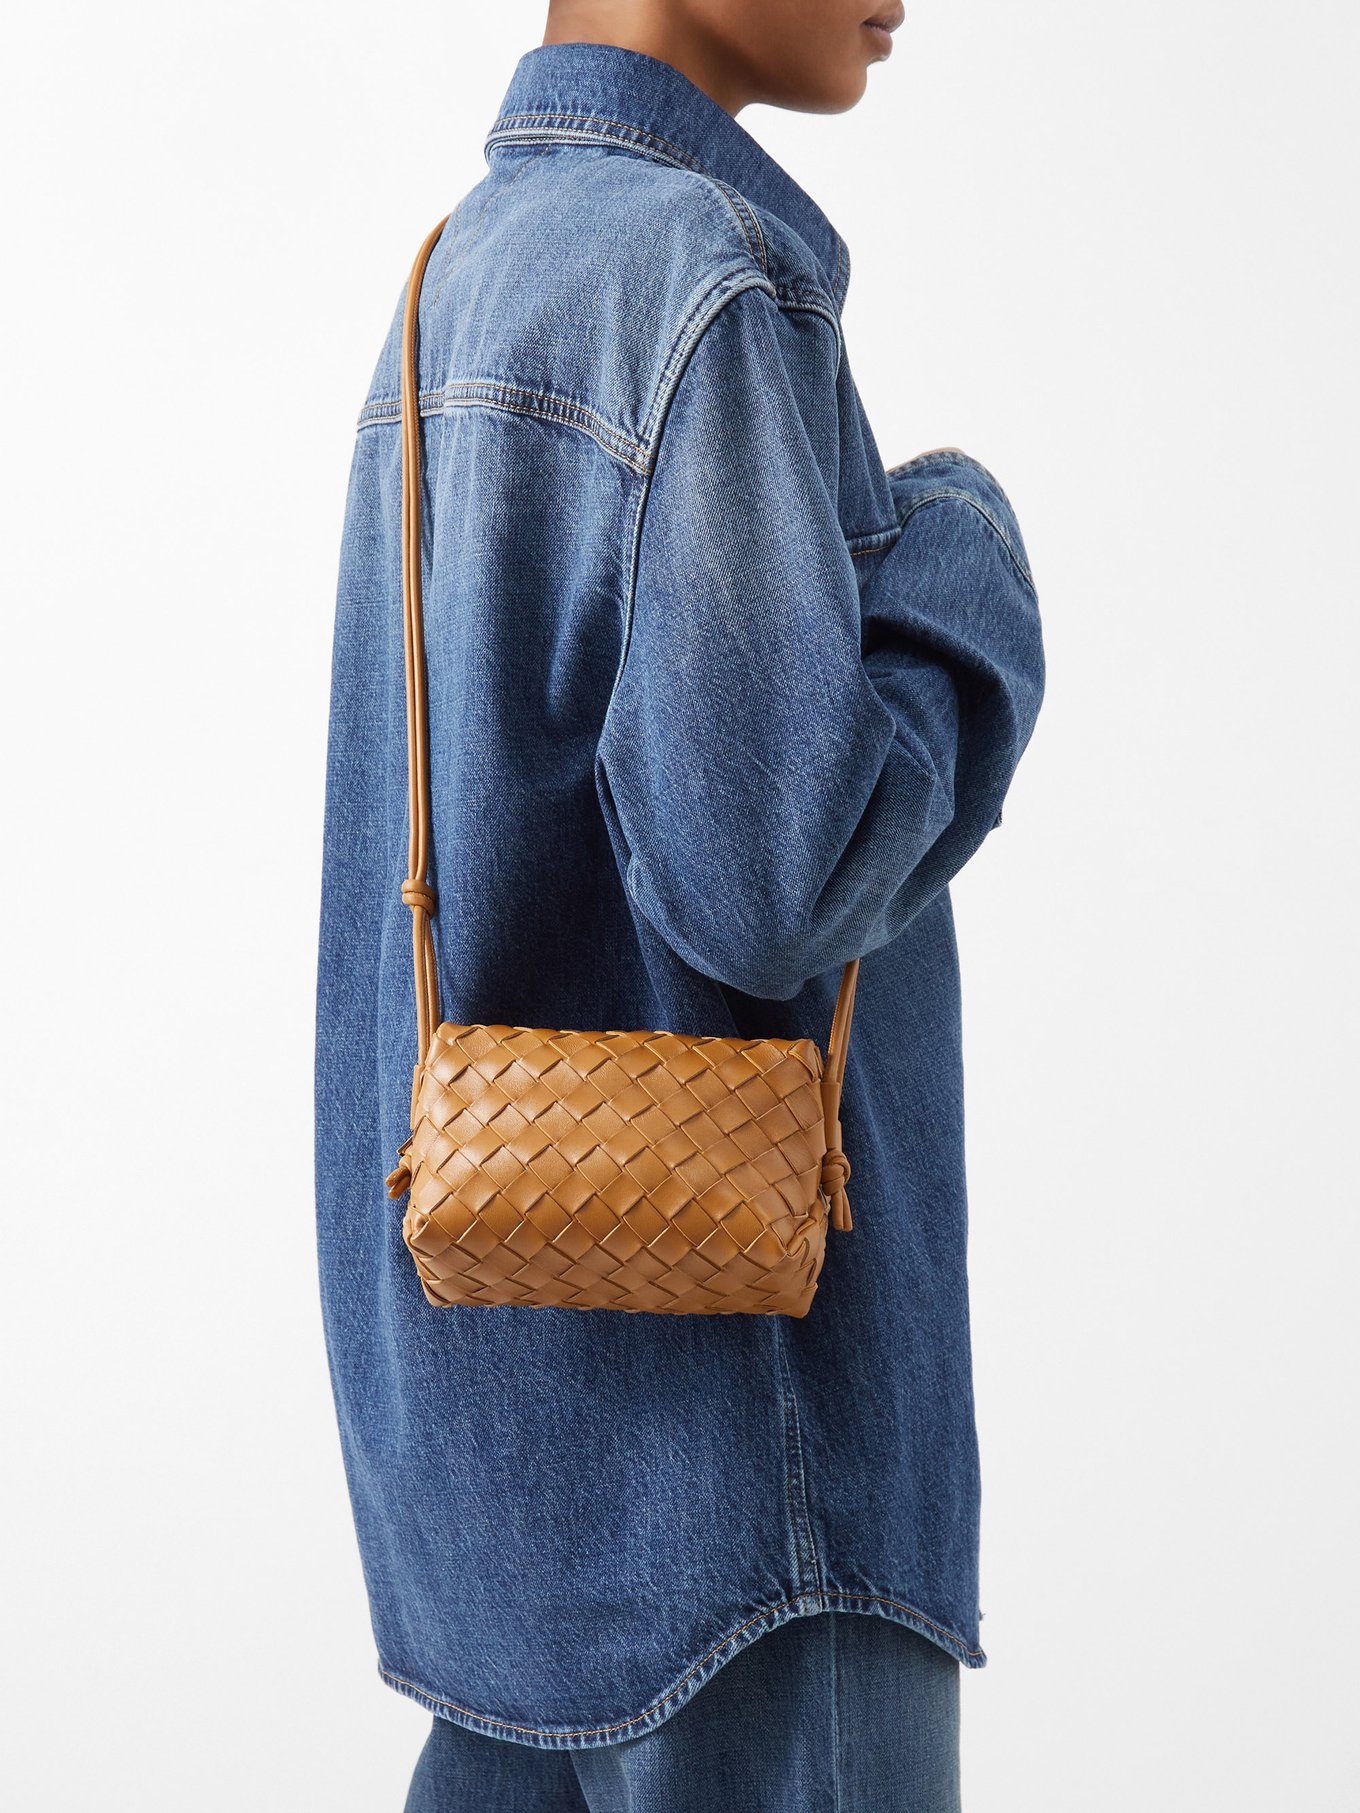 Loop Bottega Veneta Bag in Woven Leather